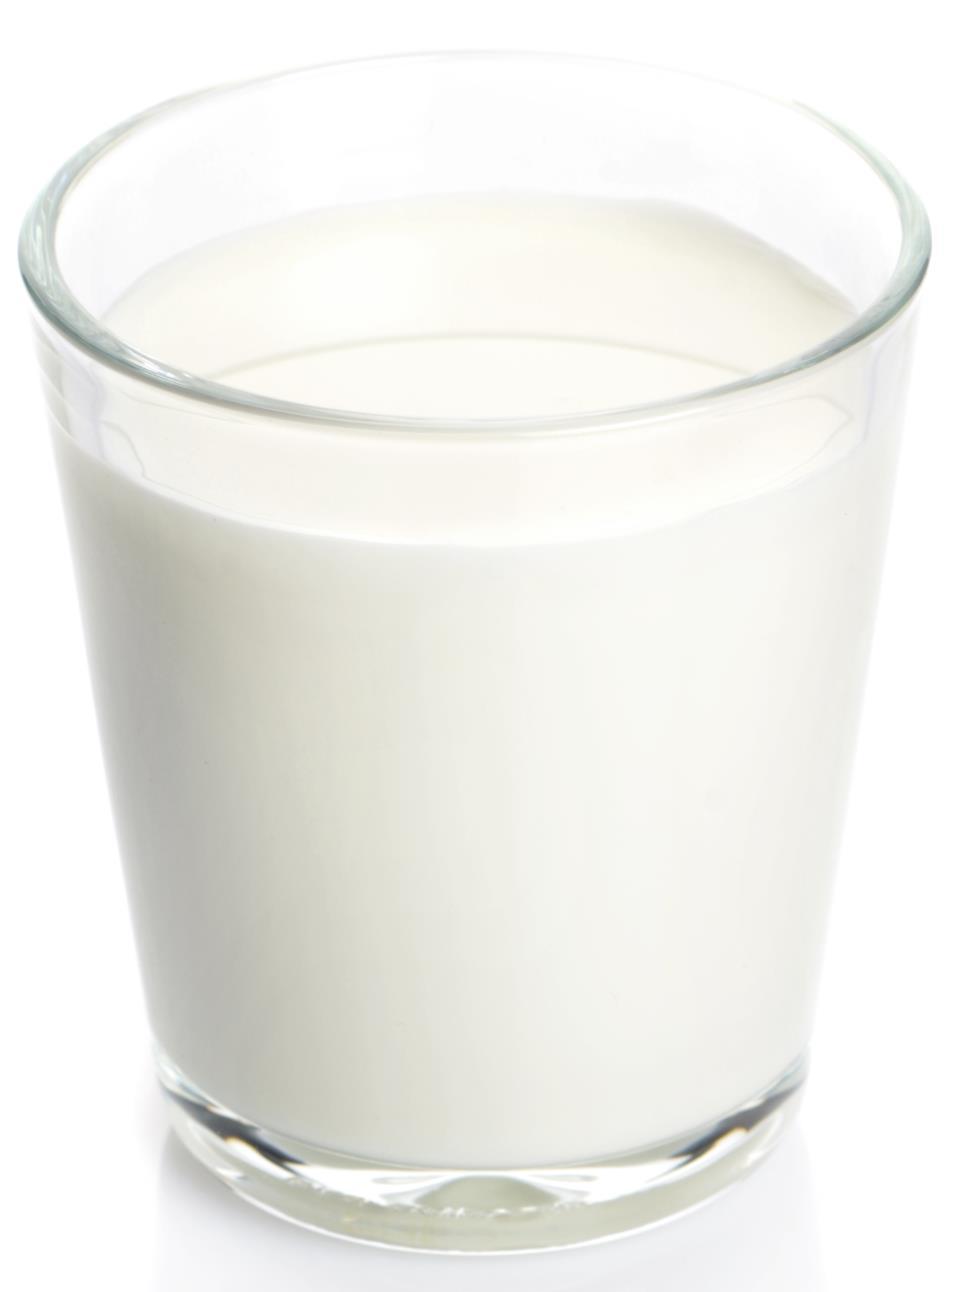 4% Calcium 1200-1300mg/l Vitamins